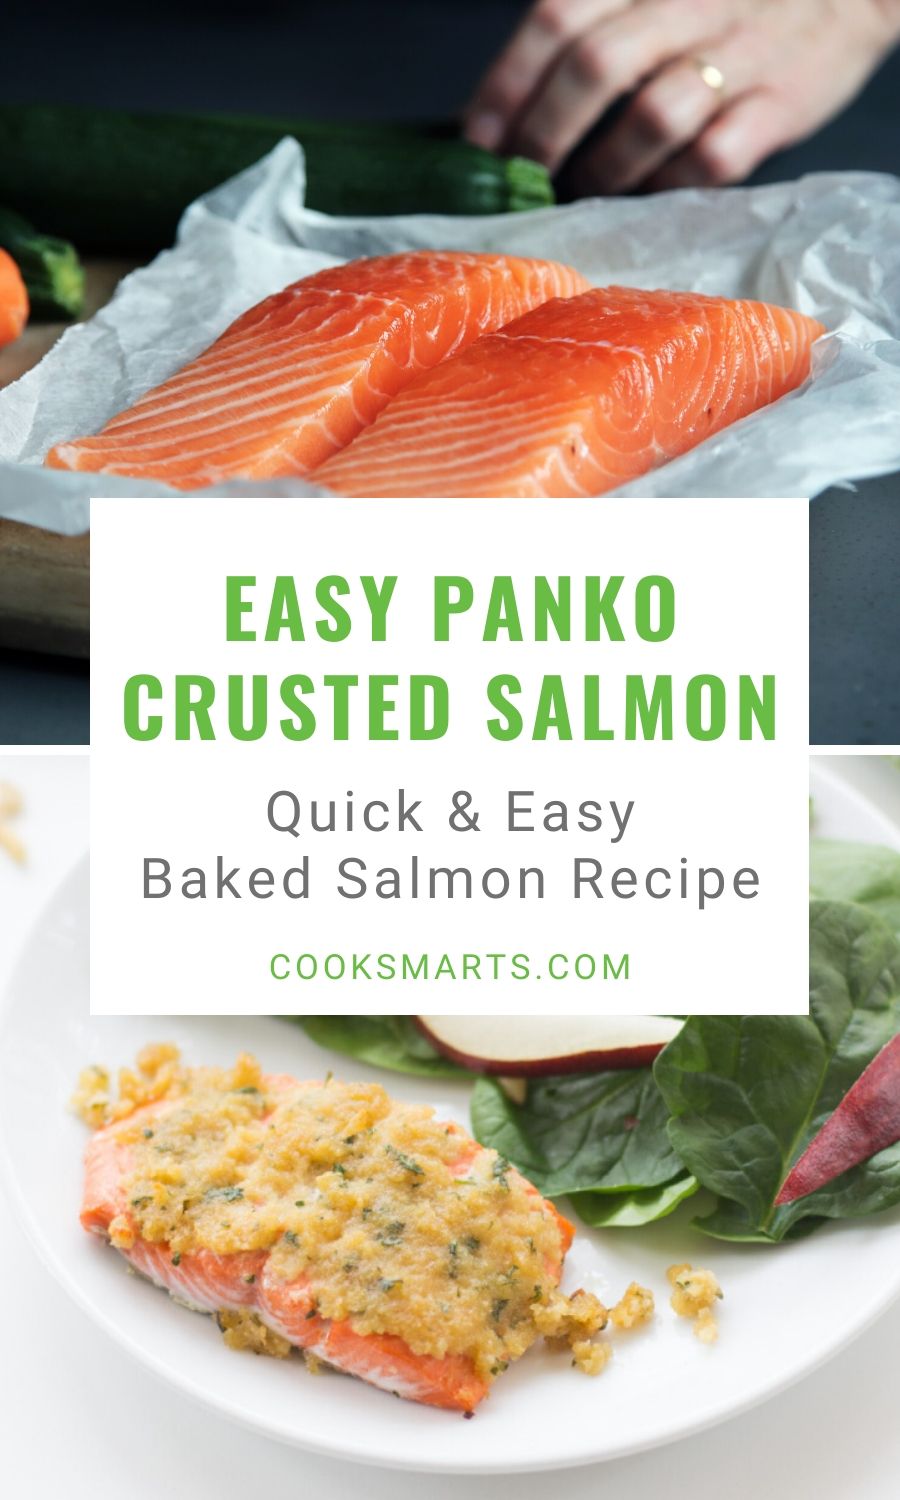 Maple Dijon Panko Crusted Salmon Recipe | Cook Smarts